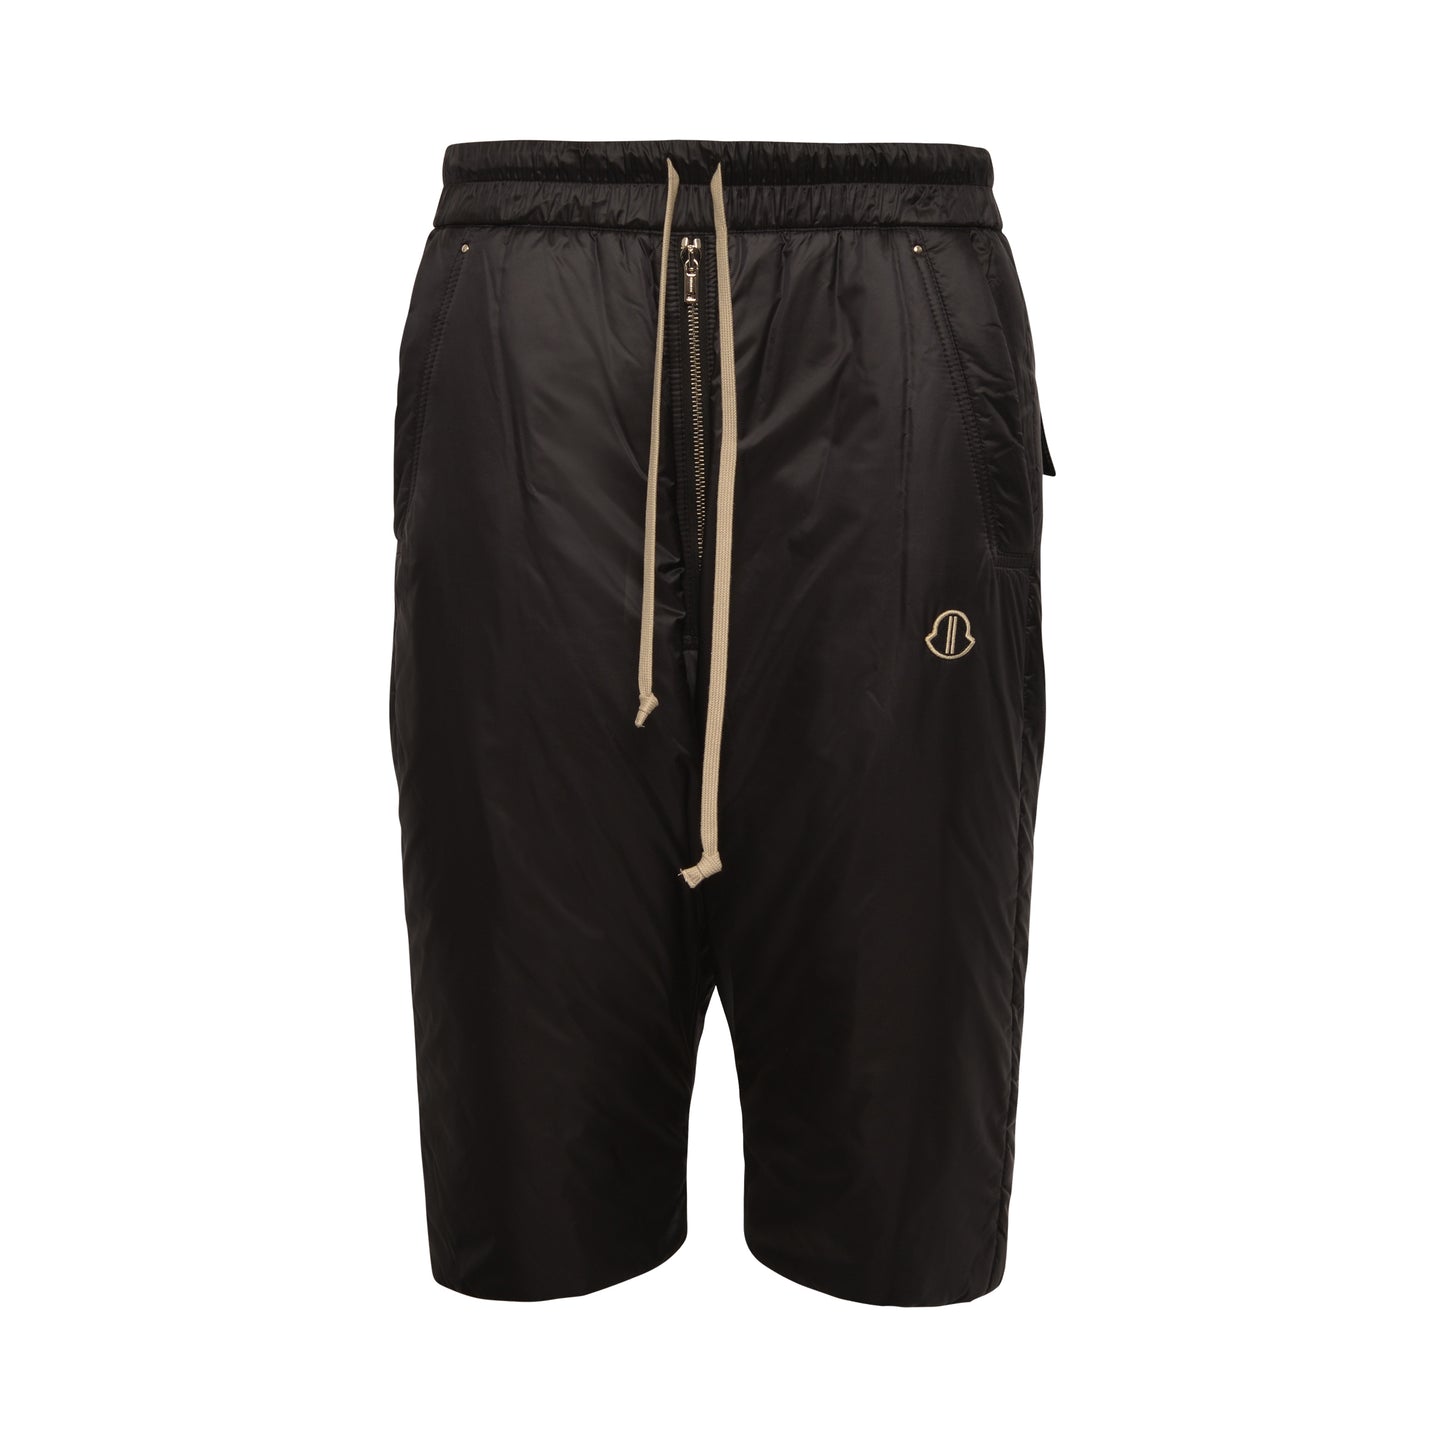 Rick Owens x Moncler Logo Shorts in Black